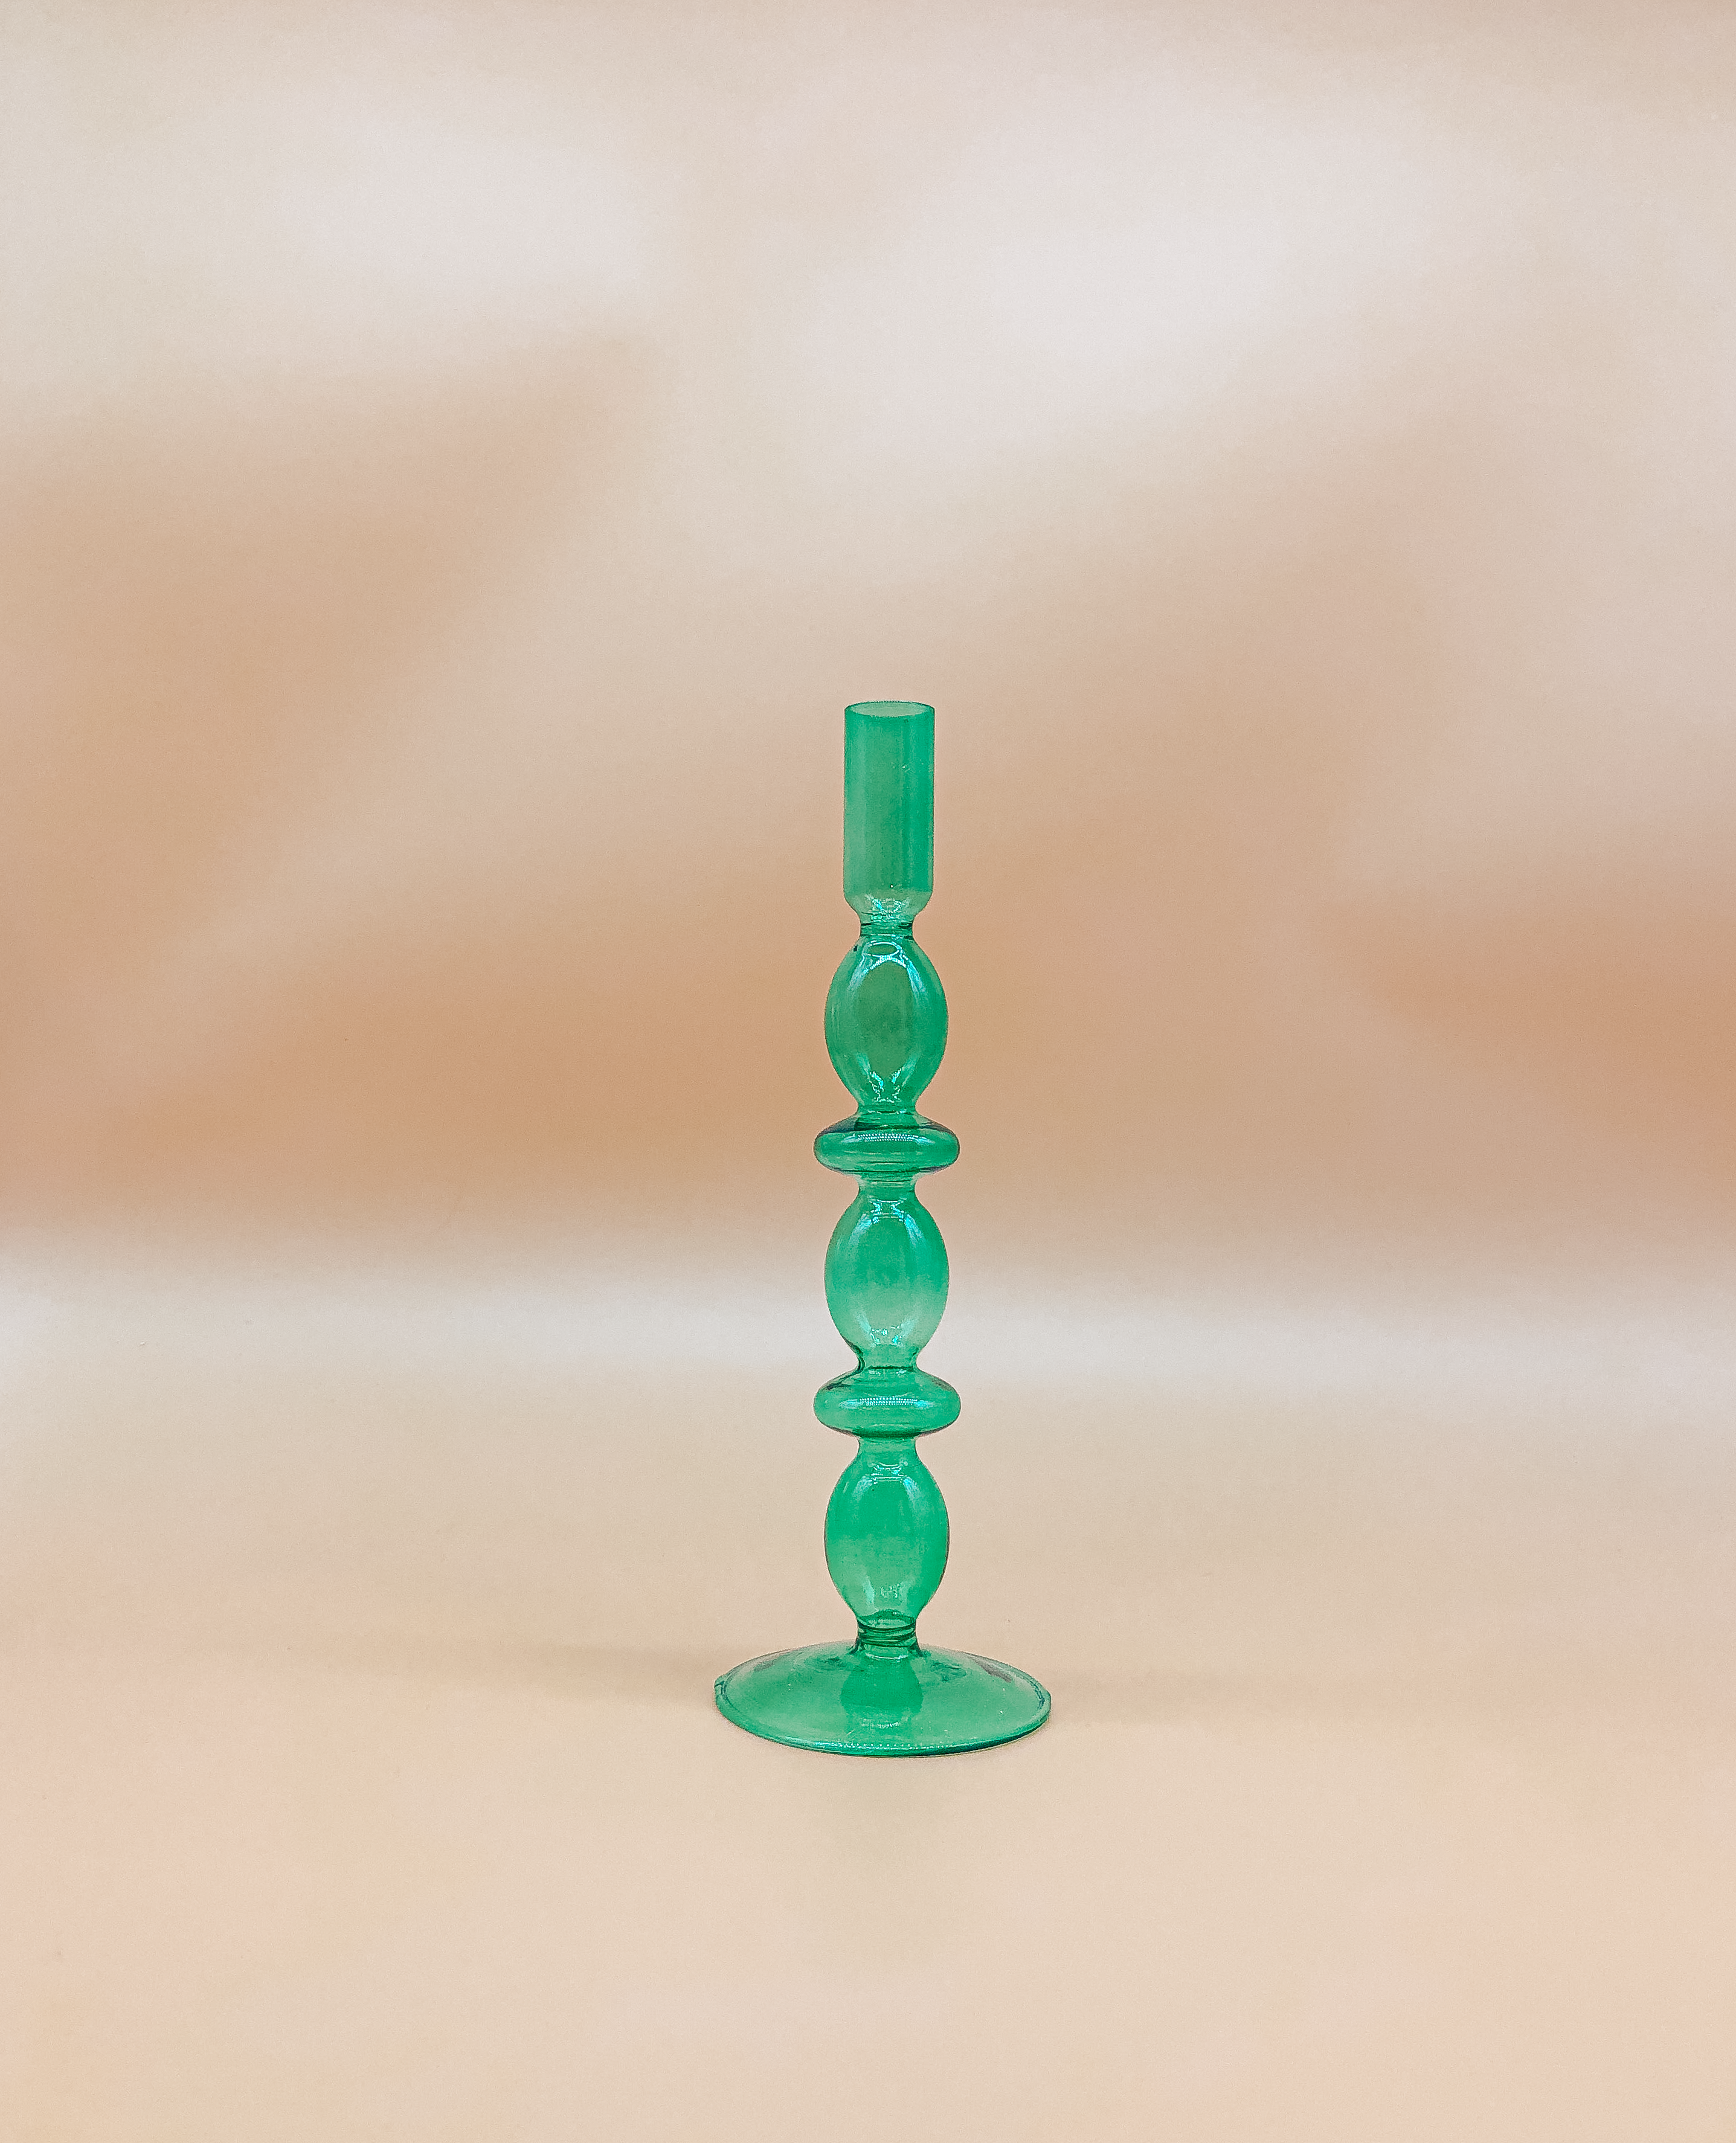 Vintage Emerald Candle Holder by PROSE Tabletop